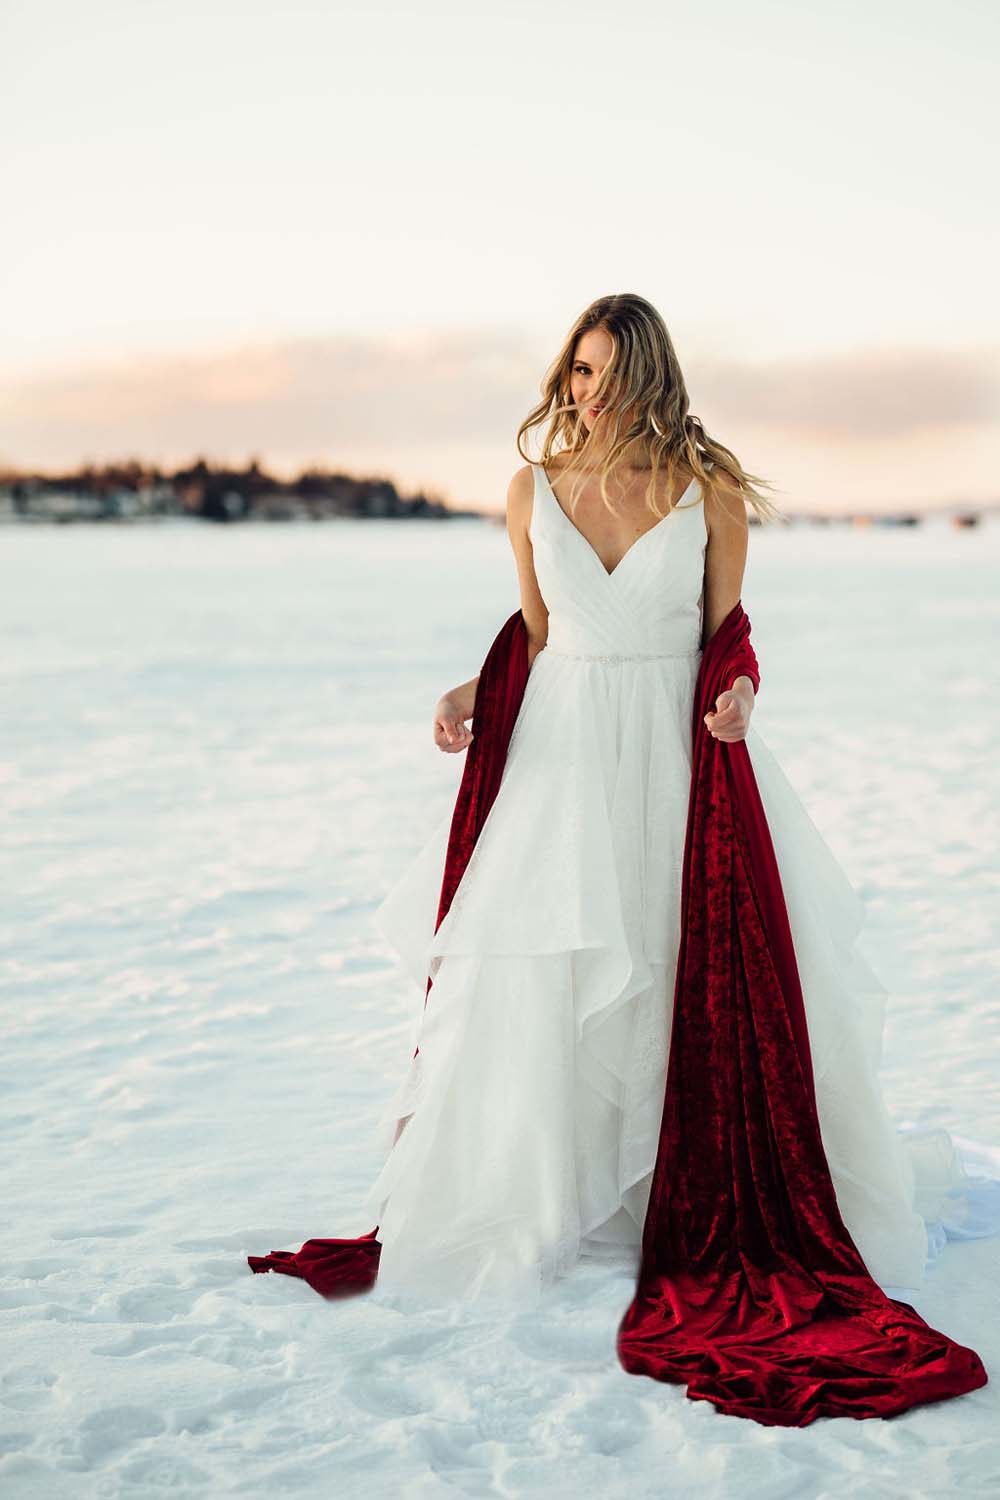 Stunning Inspiration For A Romantic Winter Wedding